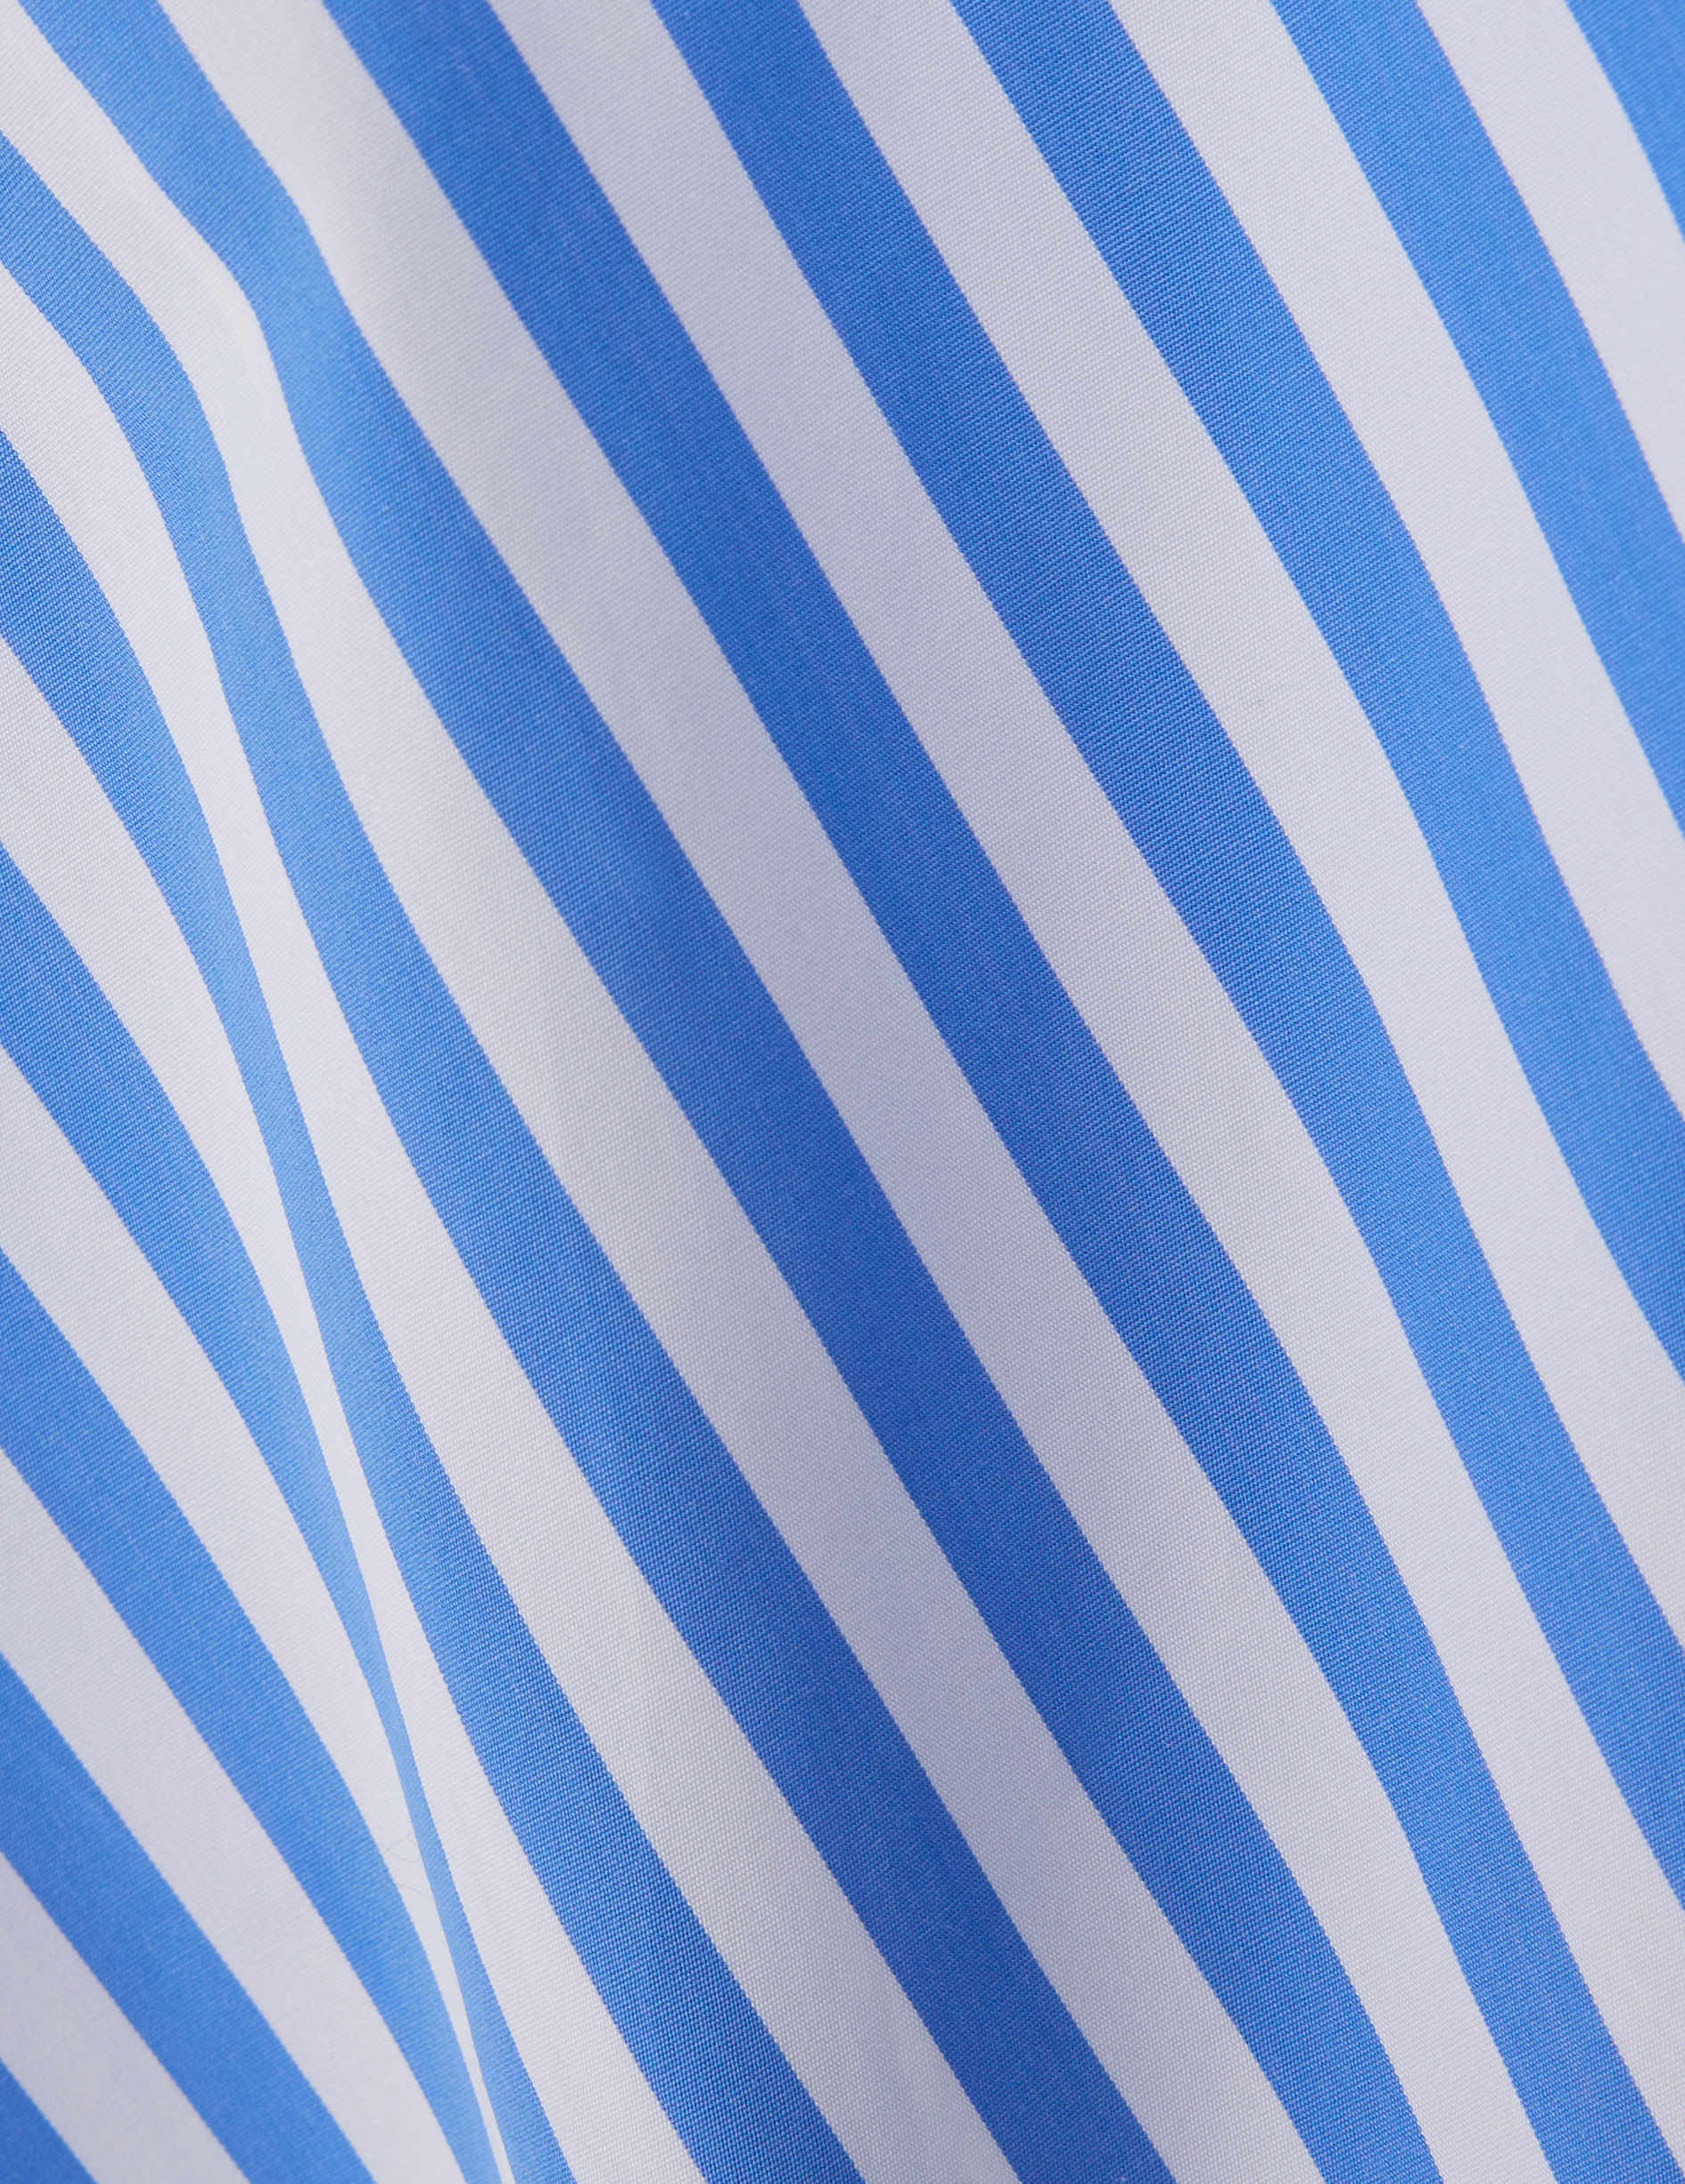 Short sleeve striped blue Hillary shirt - Poplin - Shirt Collar